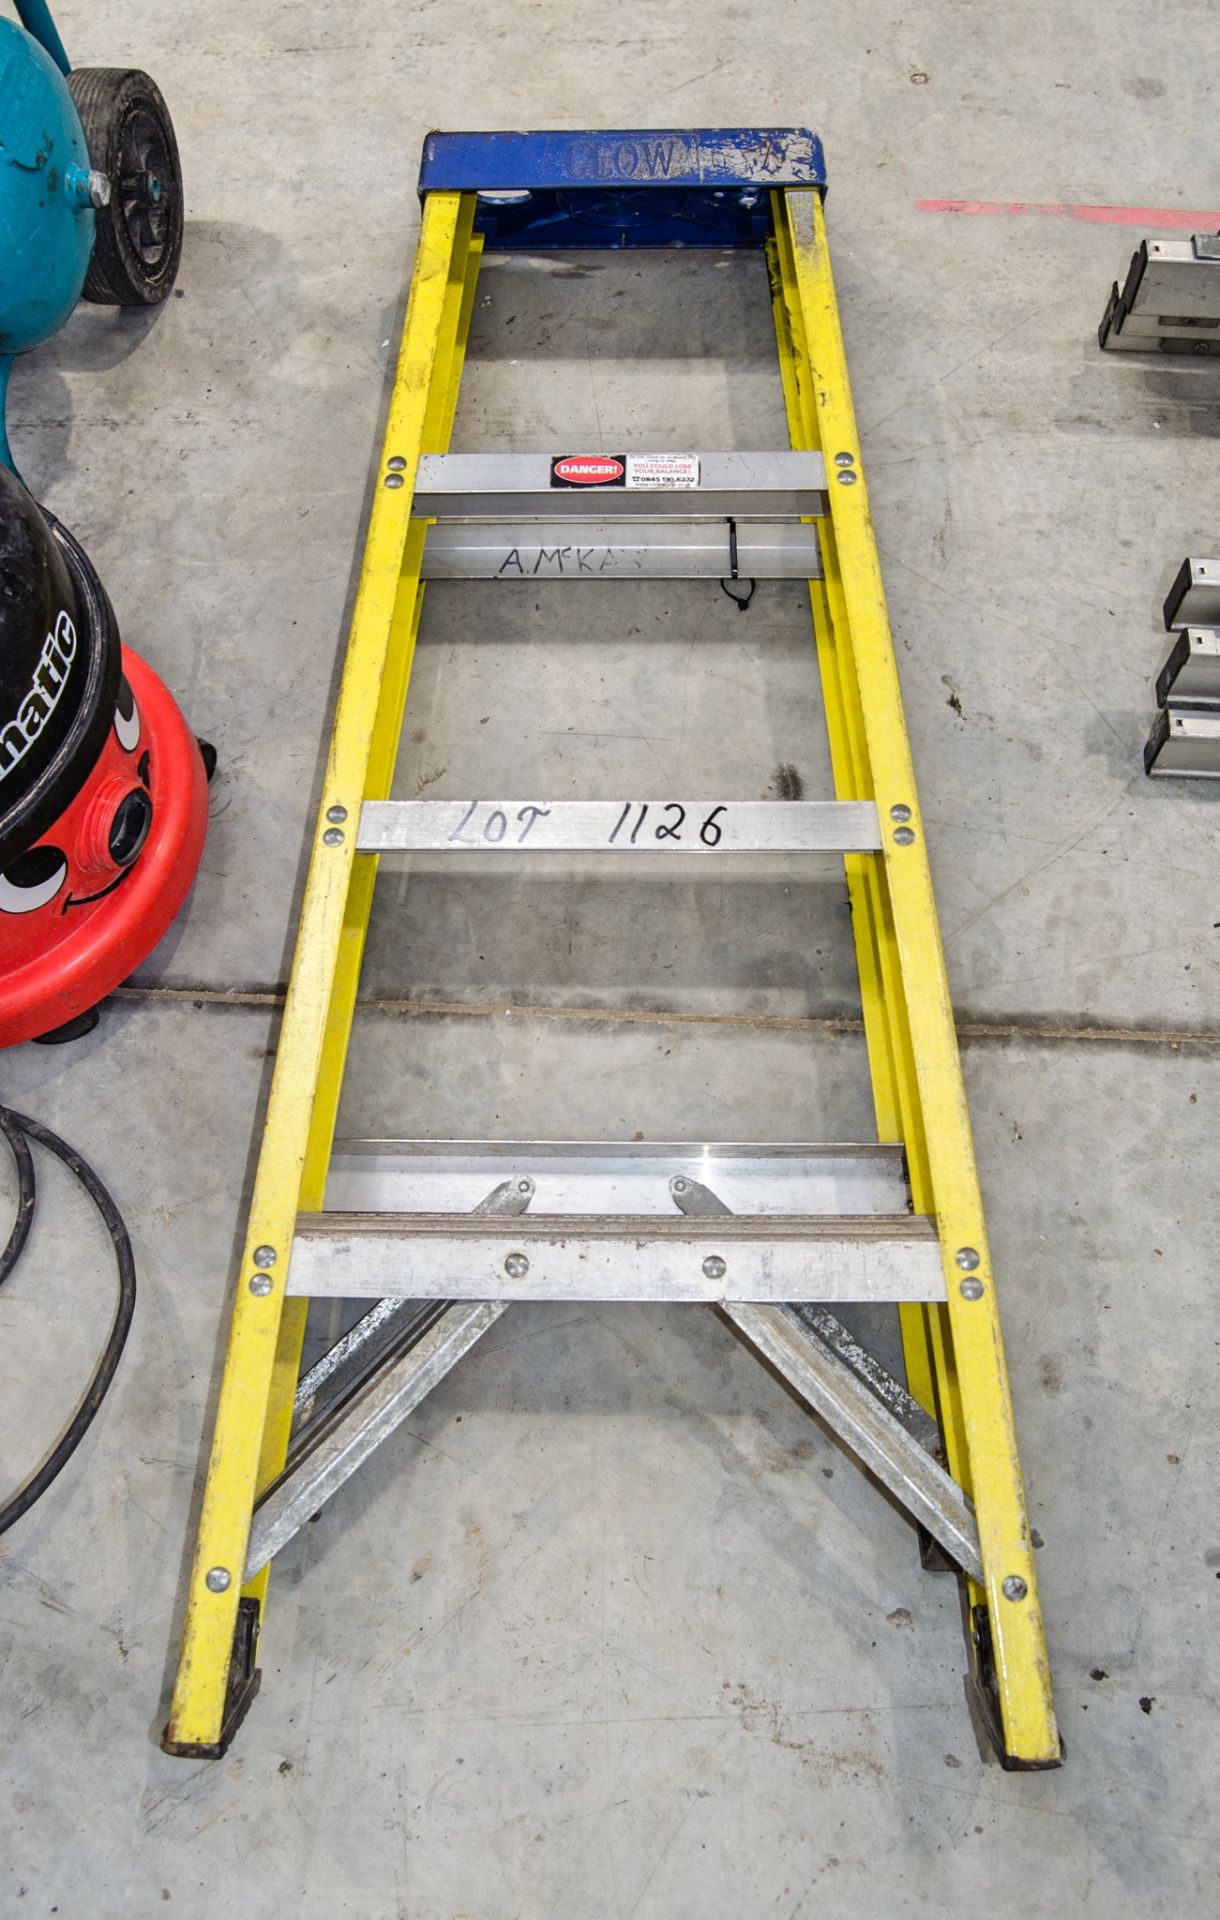 Clow 4 tread glass fibre framed step ladder AS5329